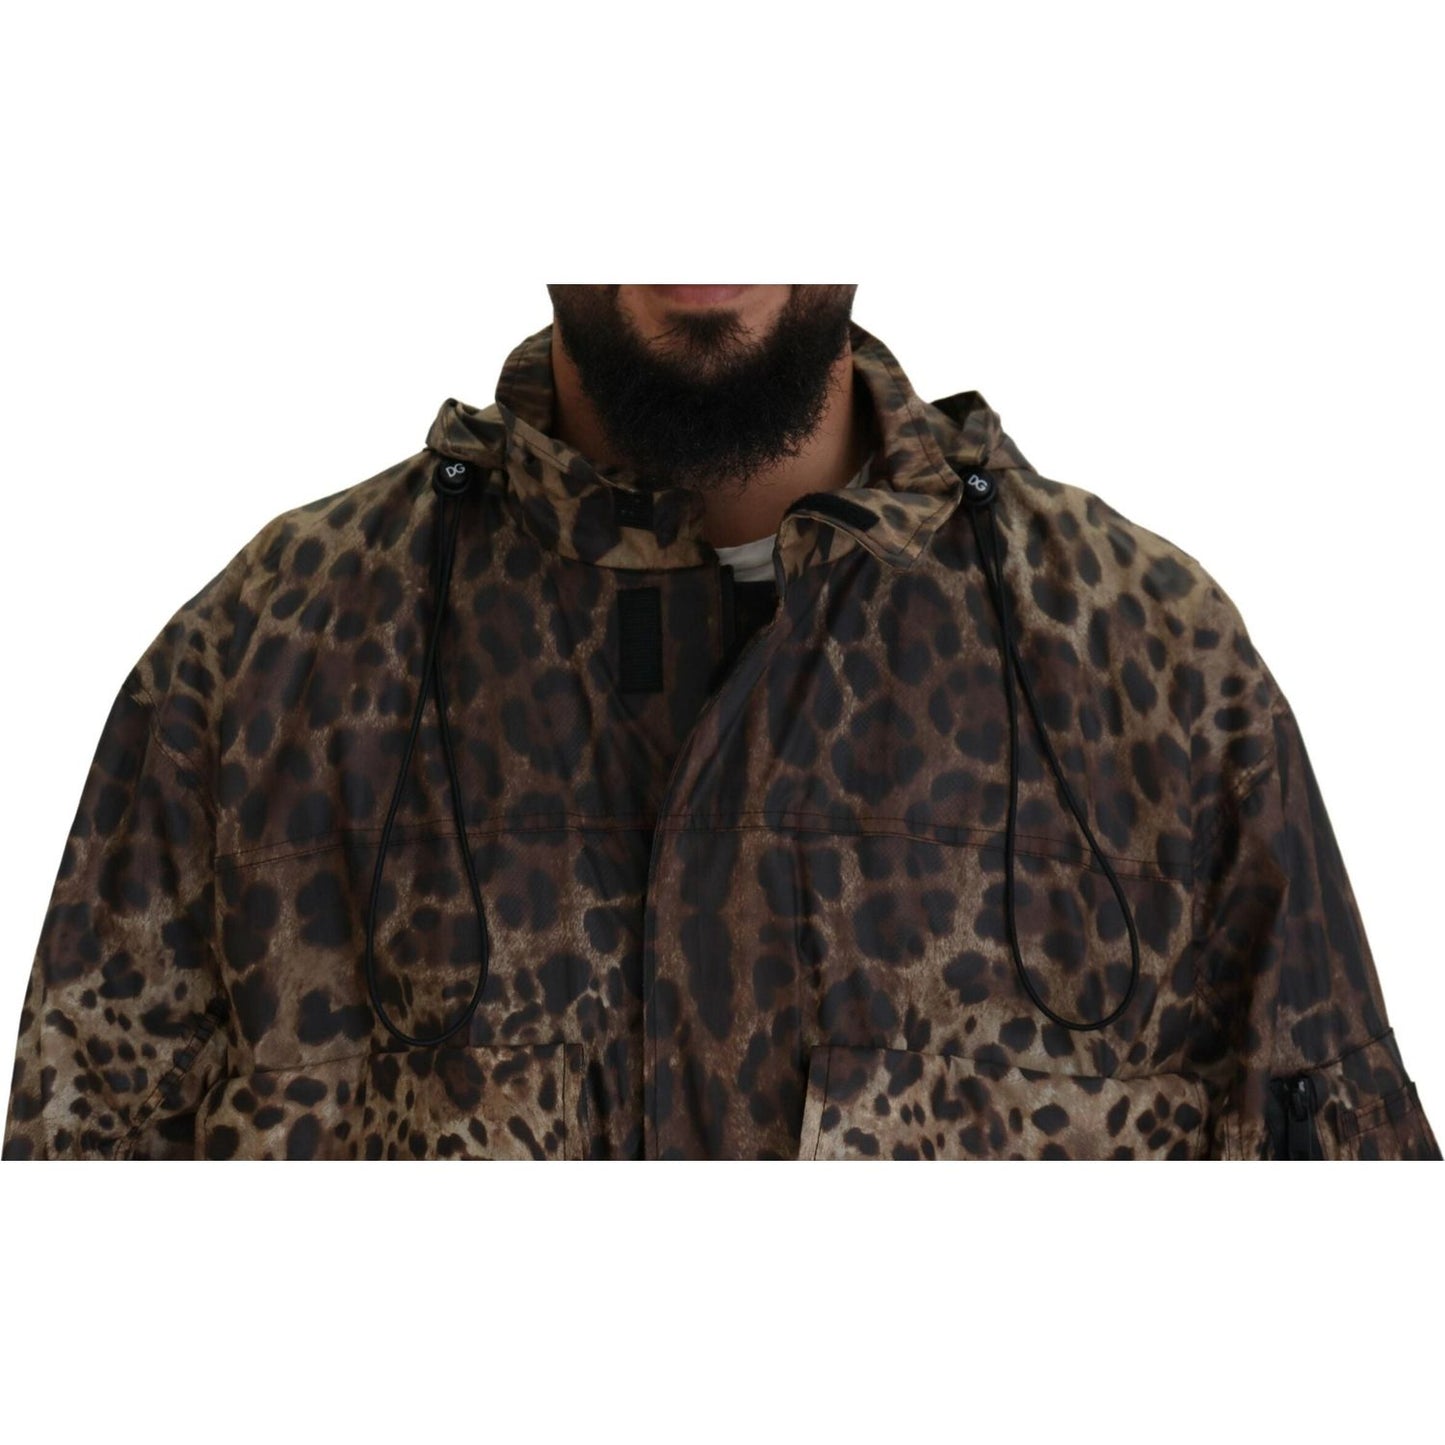 Dolce & Gabbana Elegant Leopard Print Hooded Jacket brown-leopard-print-men-hooded-jacket IMG_4055-scaled-b9efca8a-8d3.jpg